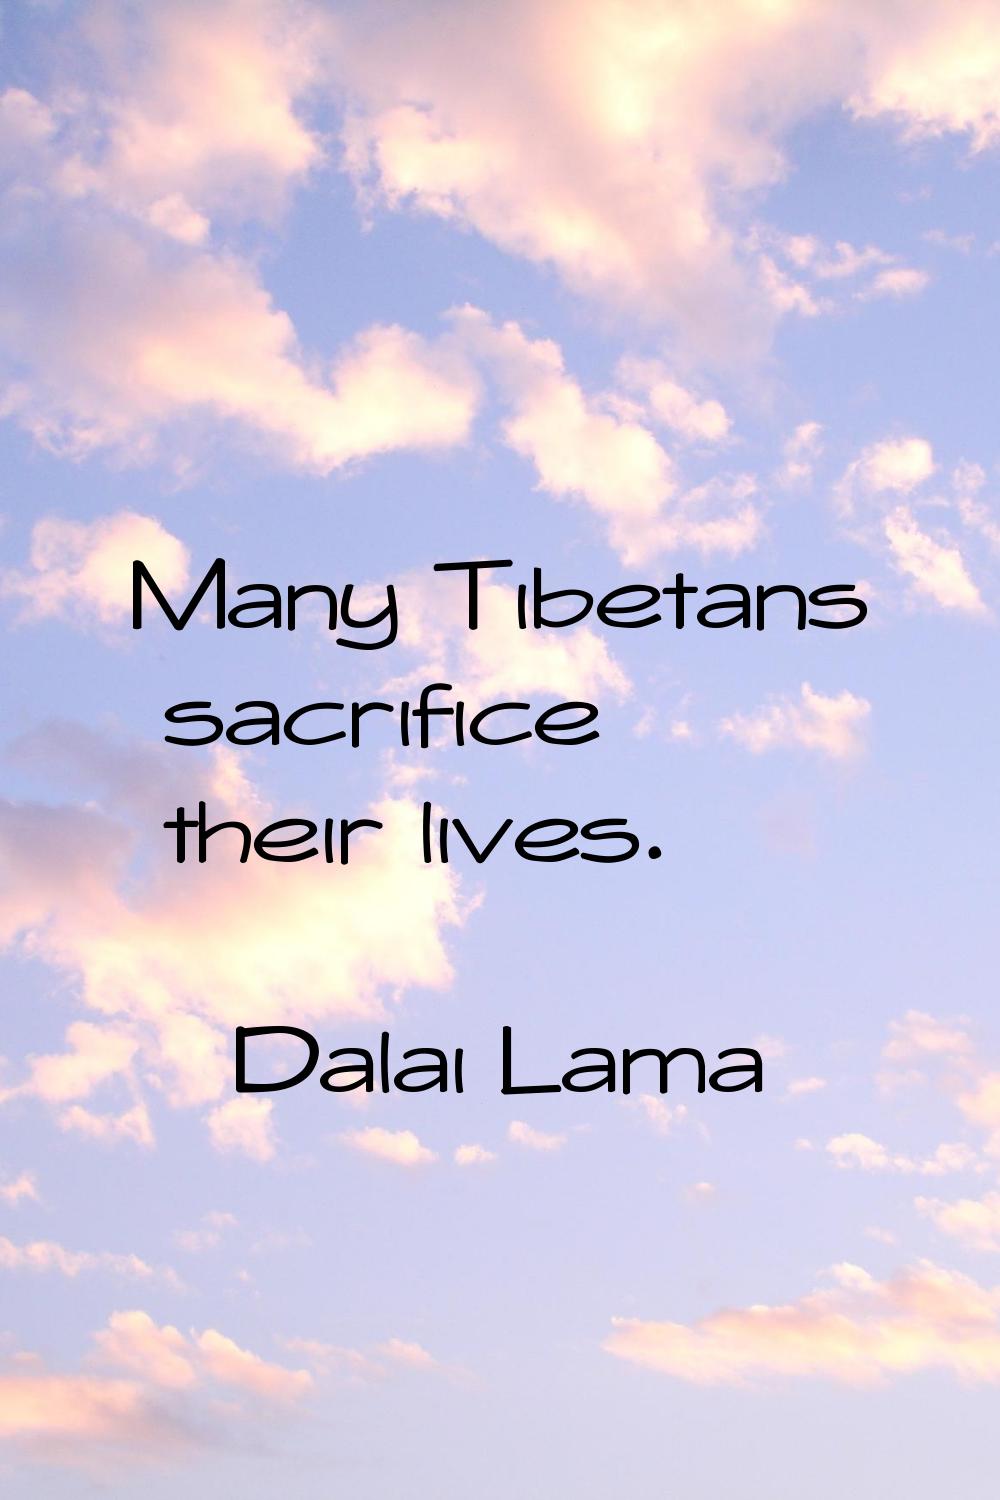 Many Tibetans sacrifice their lives.